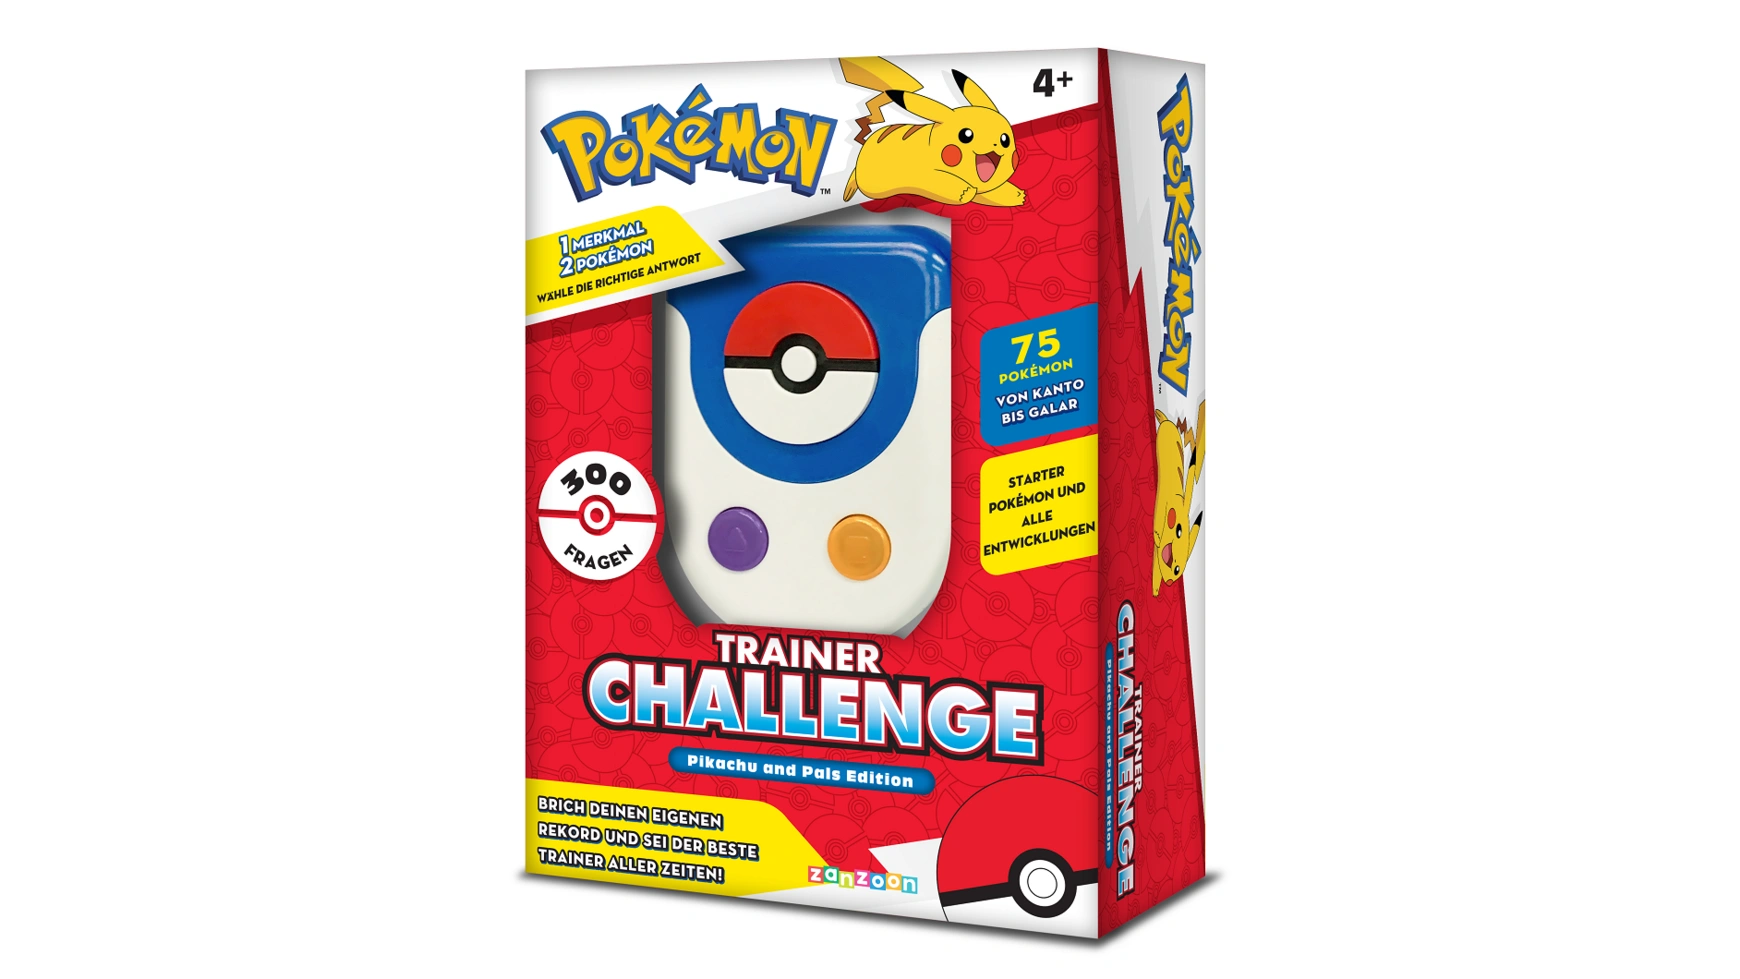 BOTI Pokémon Trainer Challenge Pikachu and Pals Edition